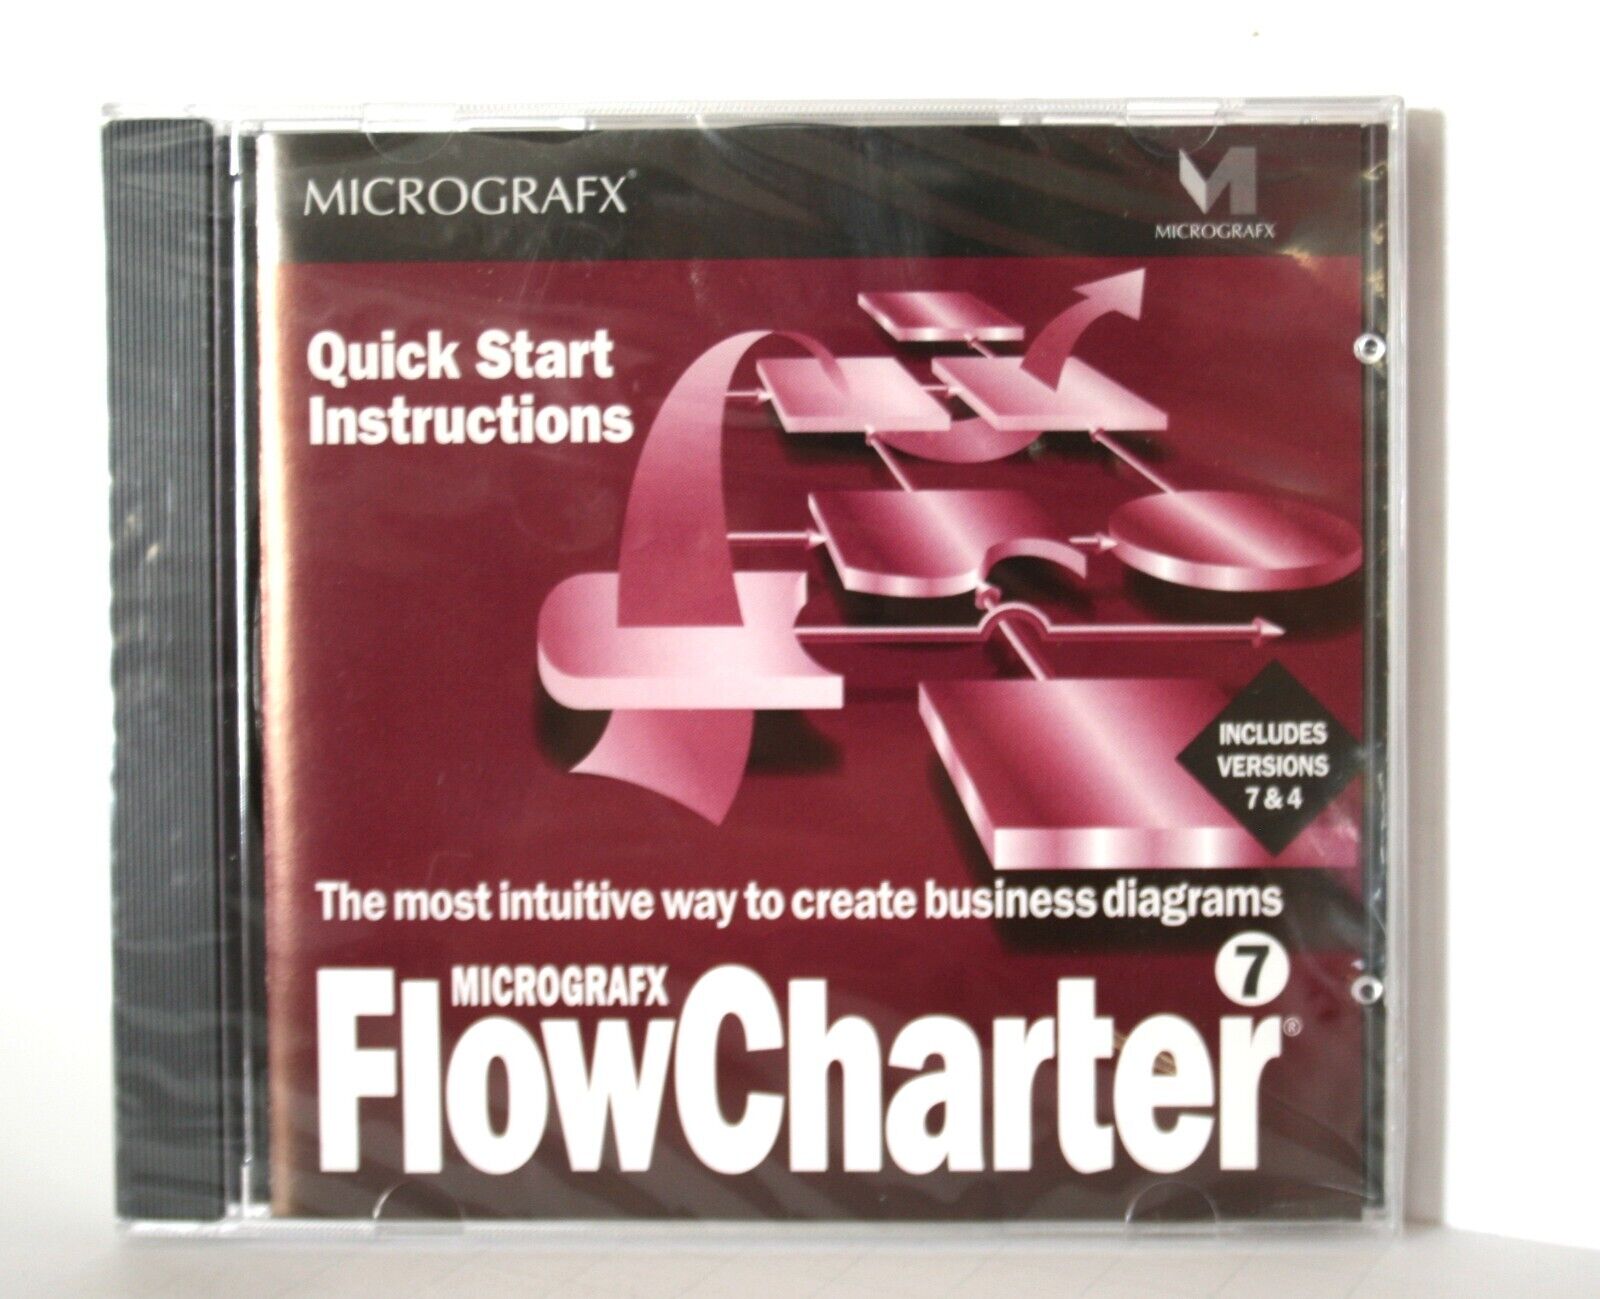 Micrografx Flowcharter 7 (includes v.4 & v.7) Win PC CD ROM NEW SEALED 